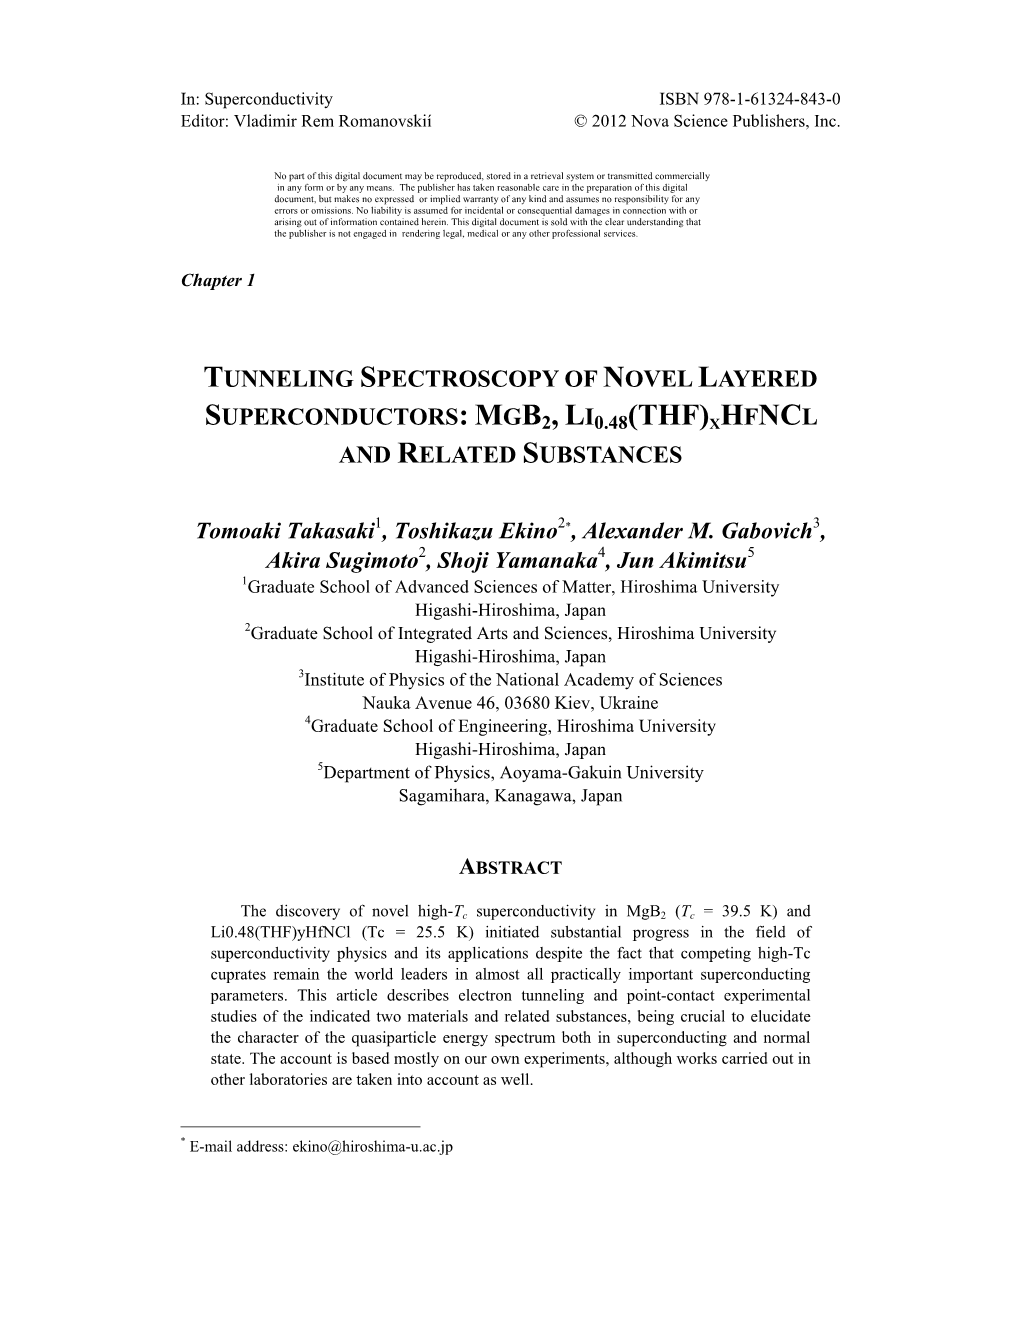 Tunneling Spectroscopy of Novel Layered Superconductors: Mgb2, Li0